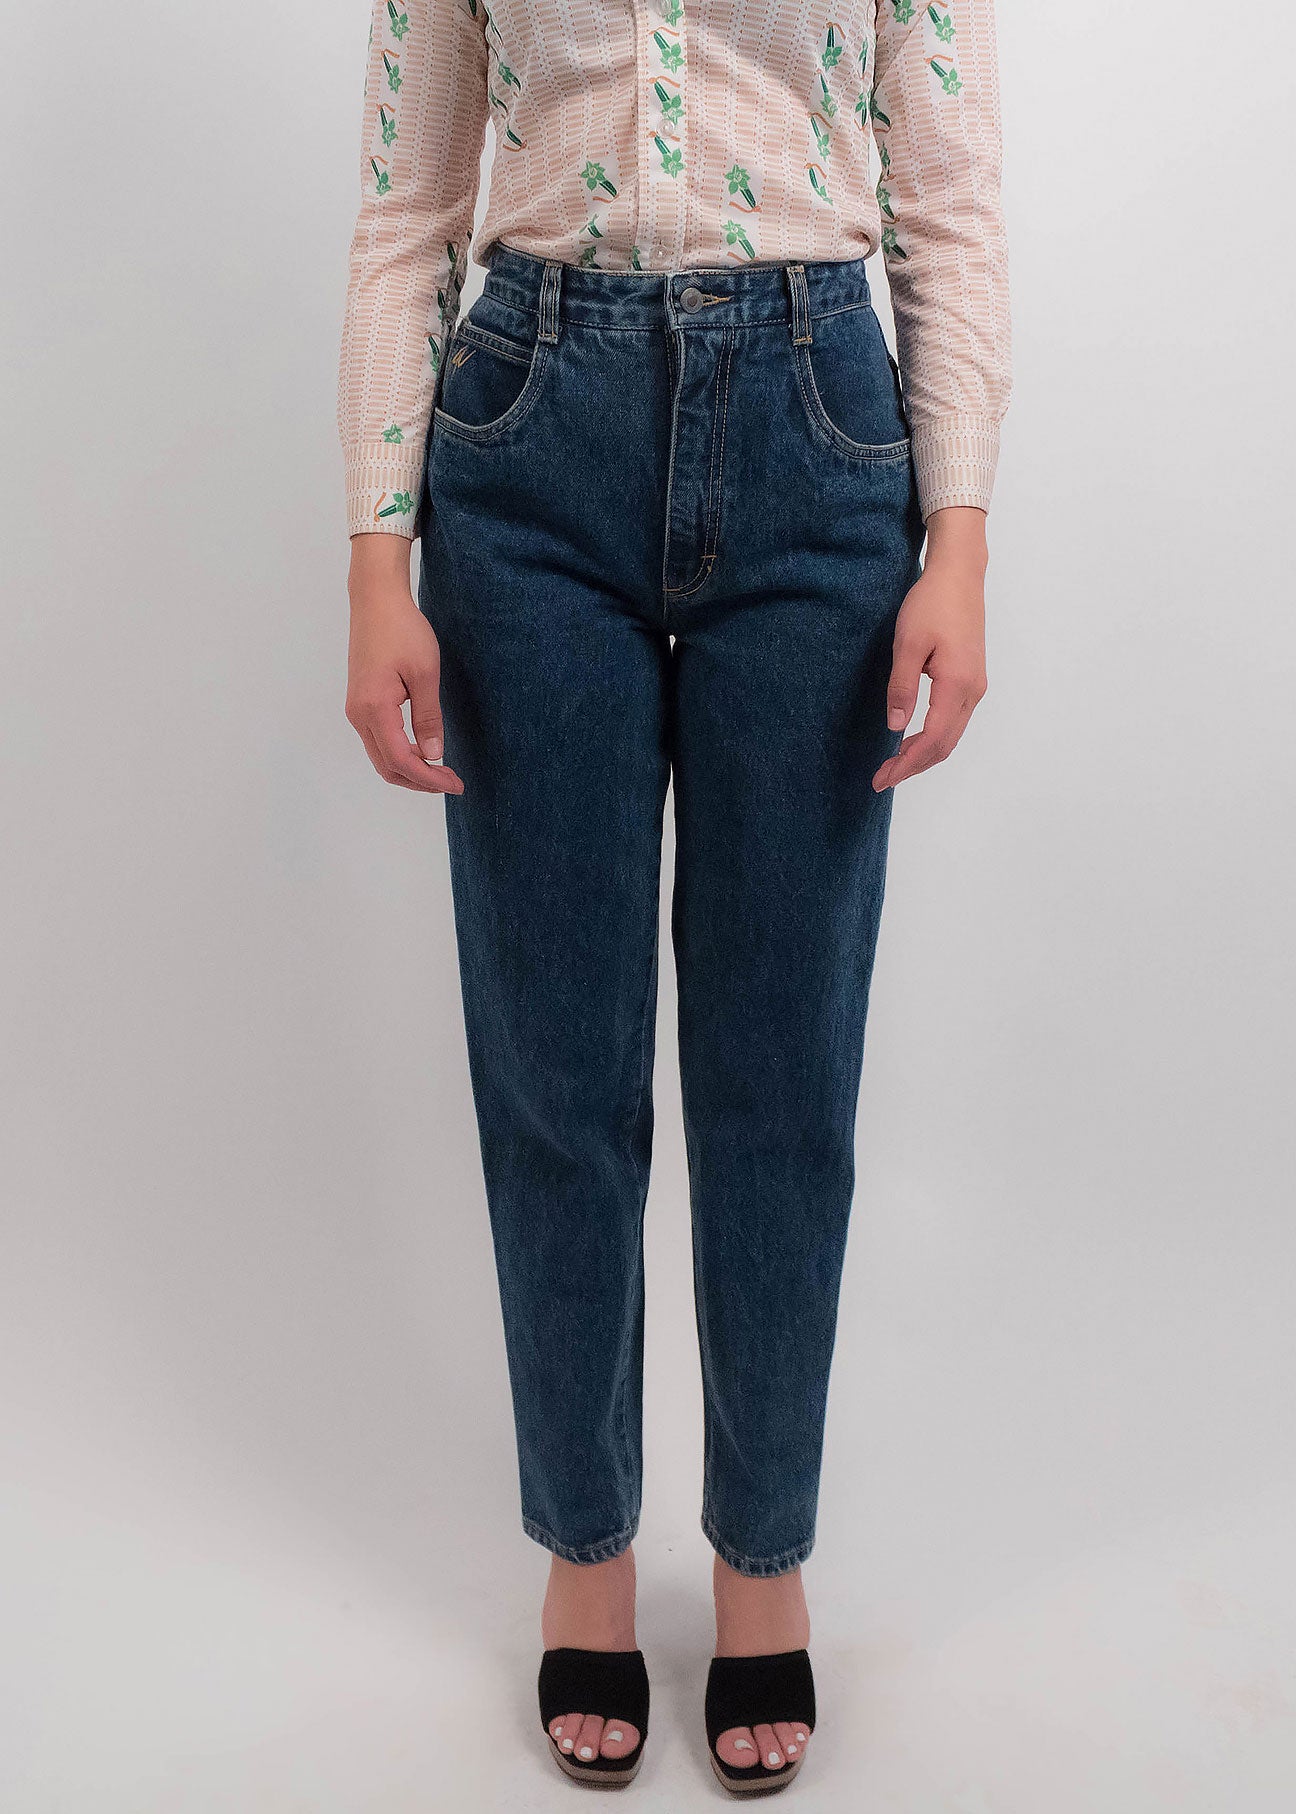 Vintage Women's 80's Elastic Waist Jeans, High Waisted, Blue, Denim S 